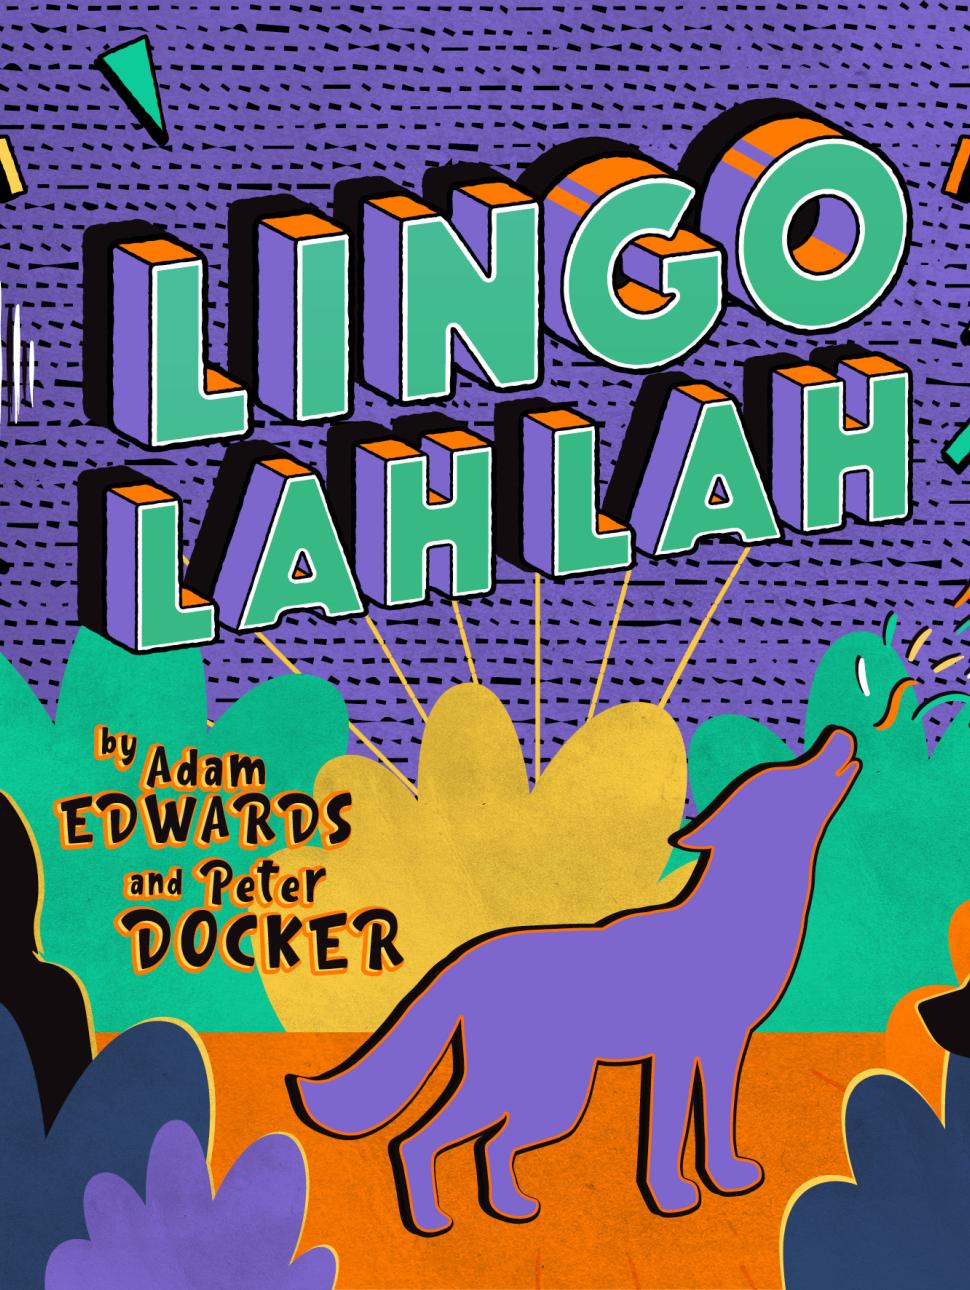 Lingo Lah Lah promotional image. Written by Adam Edwards and Peter Docker.